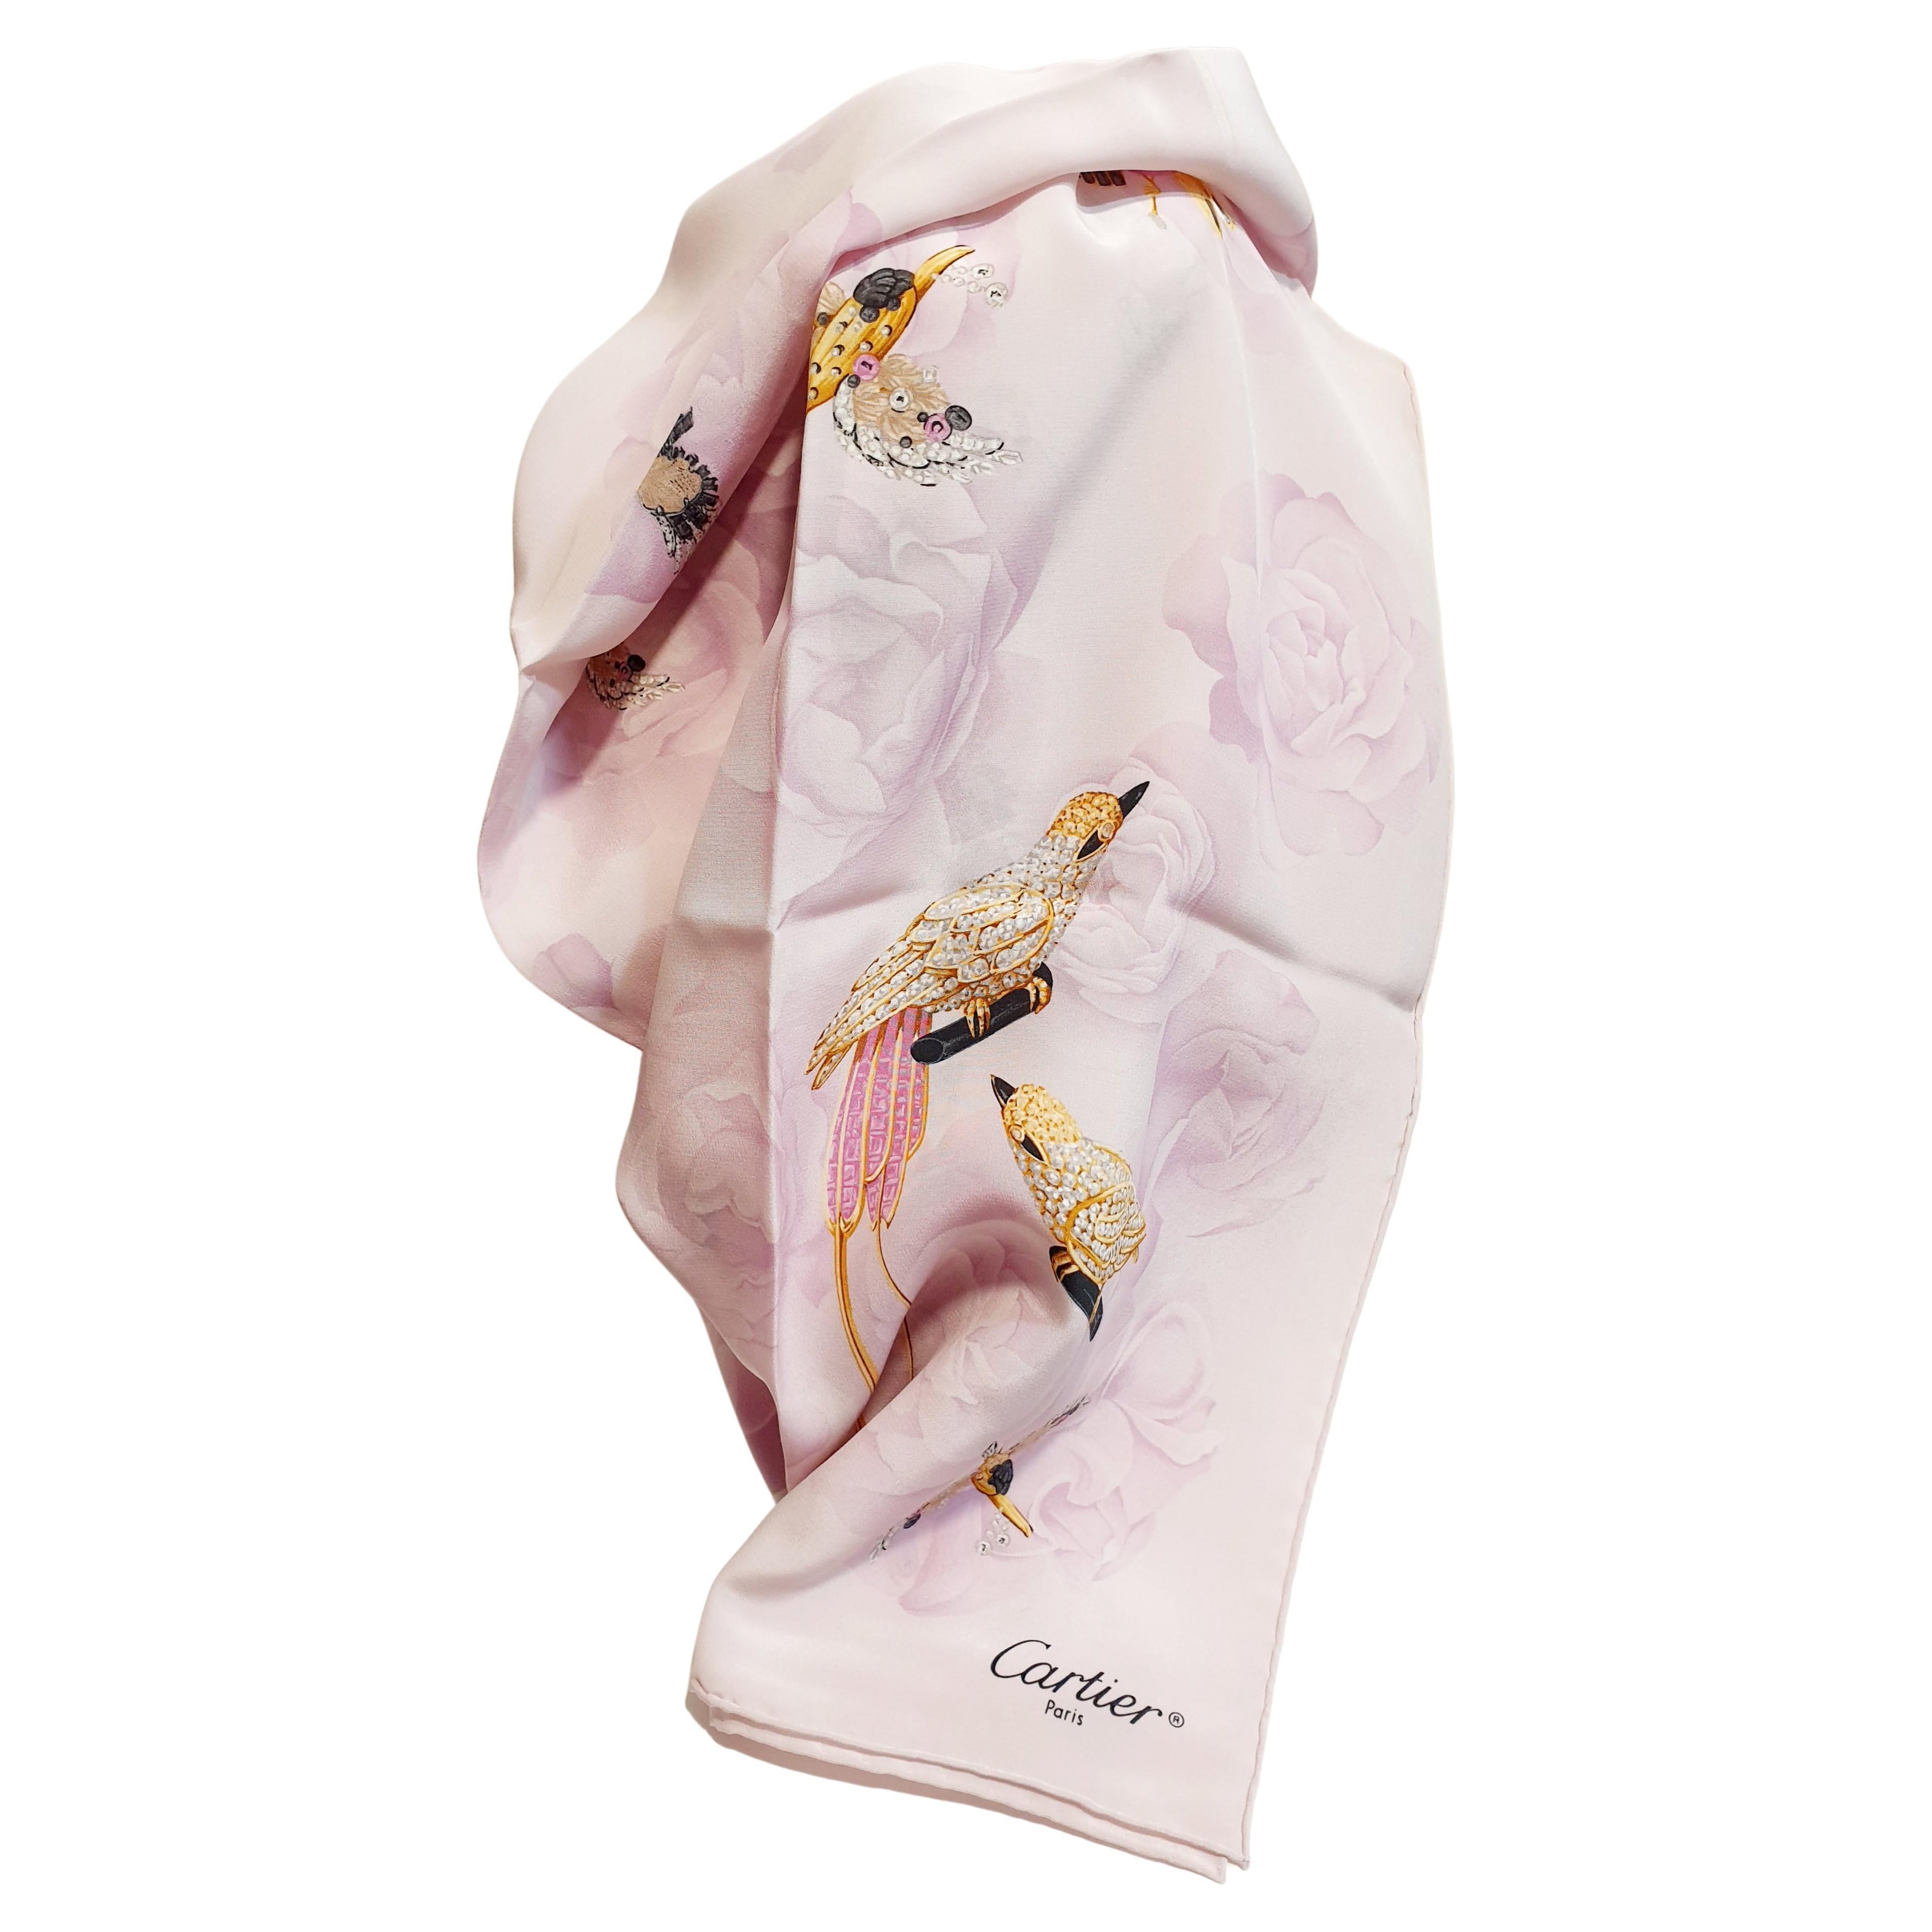 Women's New Cartier silk salmon scarf with Flora & Fauna birds designed  For Sale